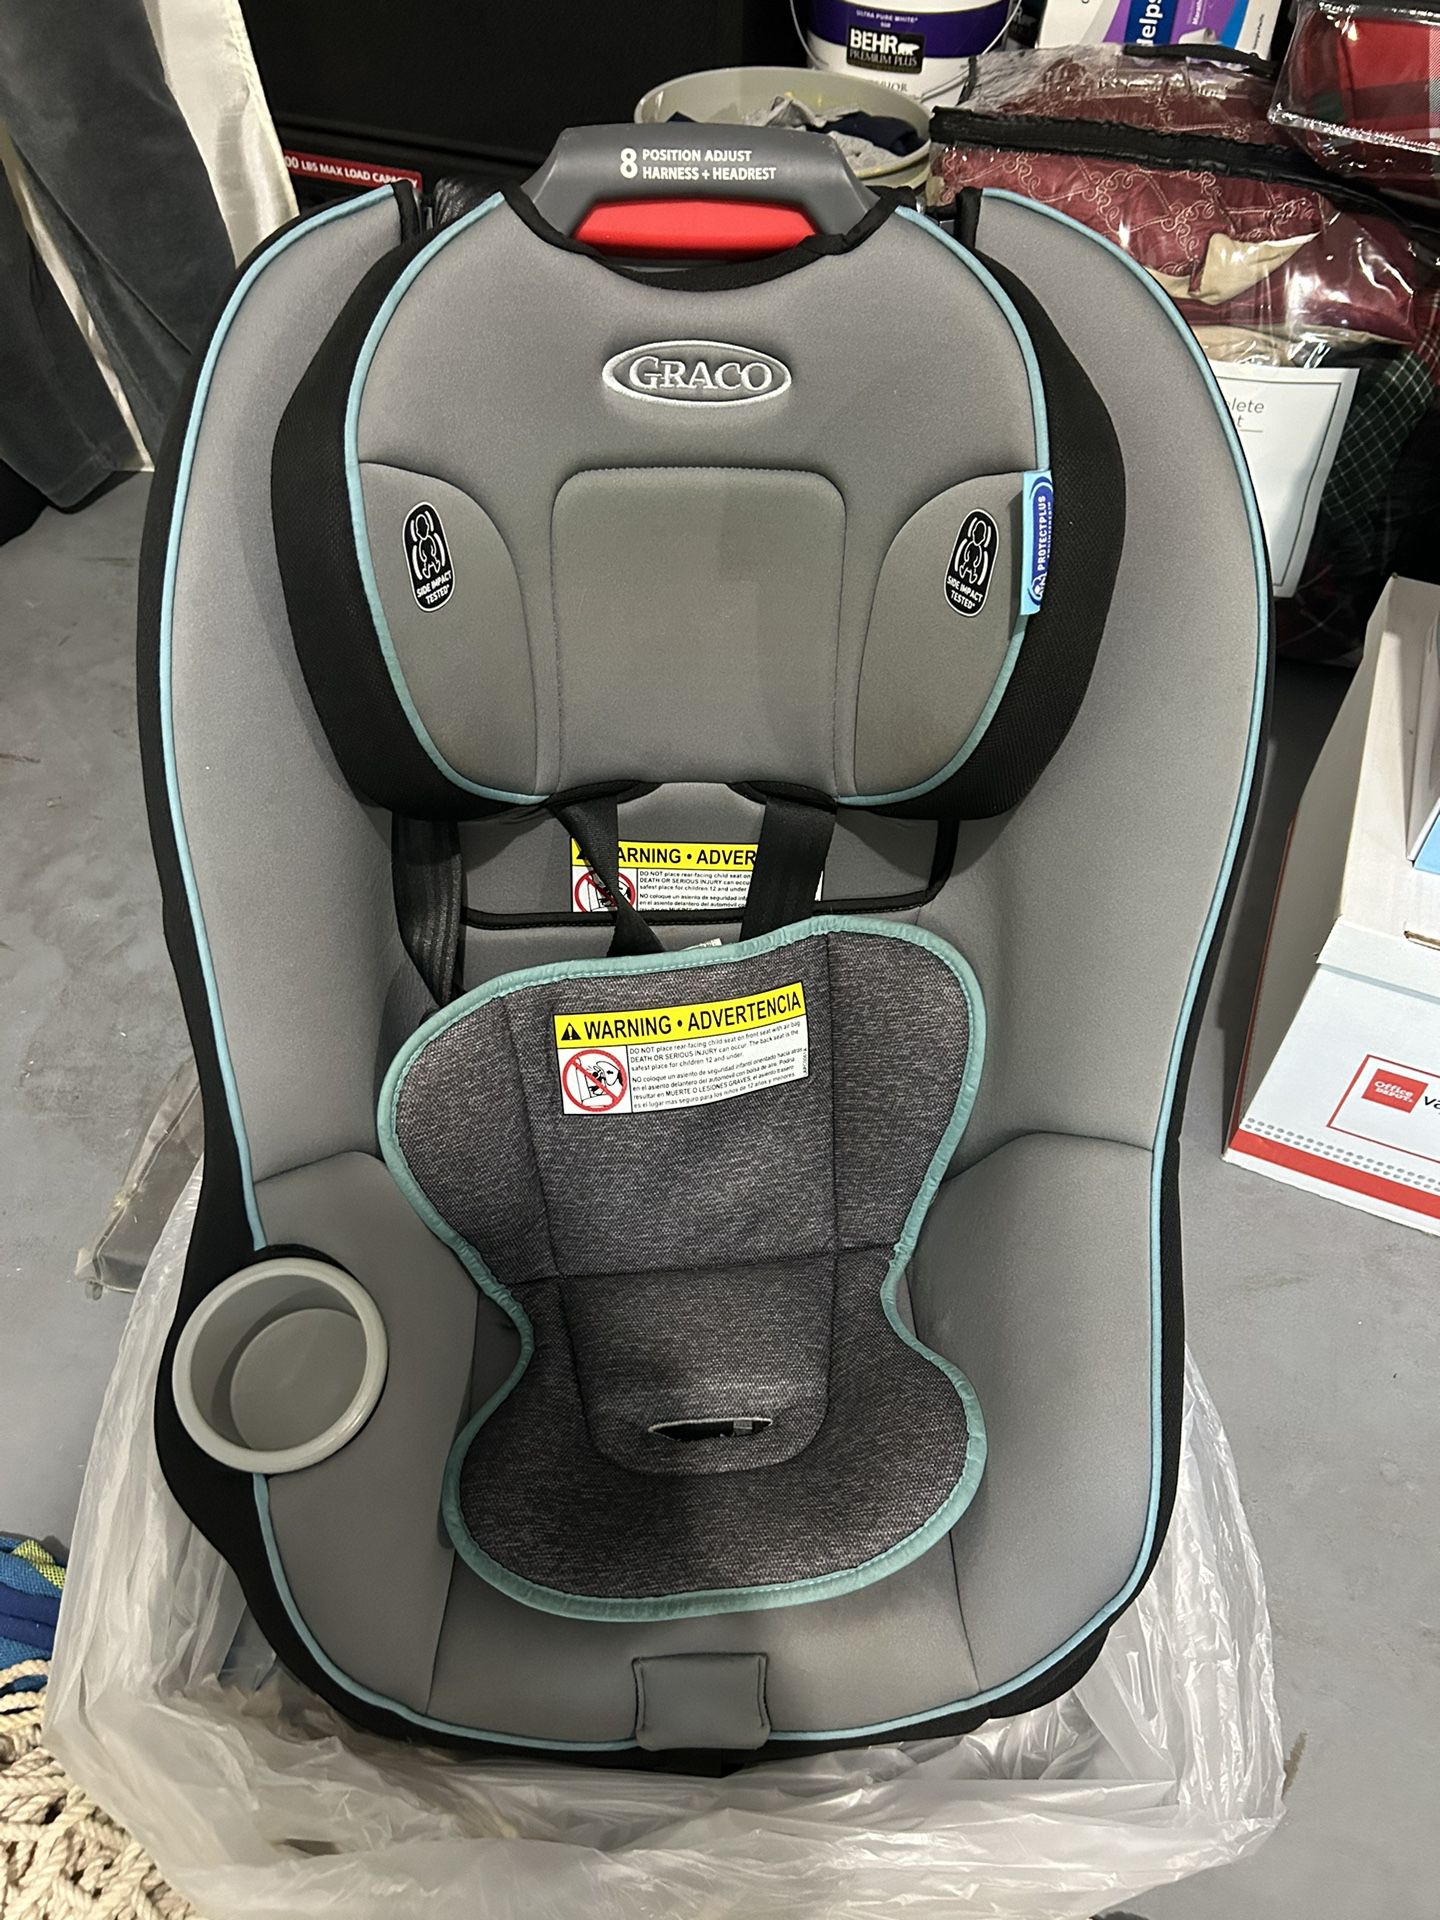 Infant/Convertible Car Seat